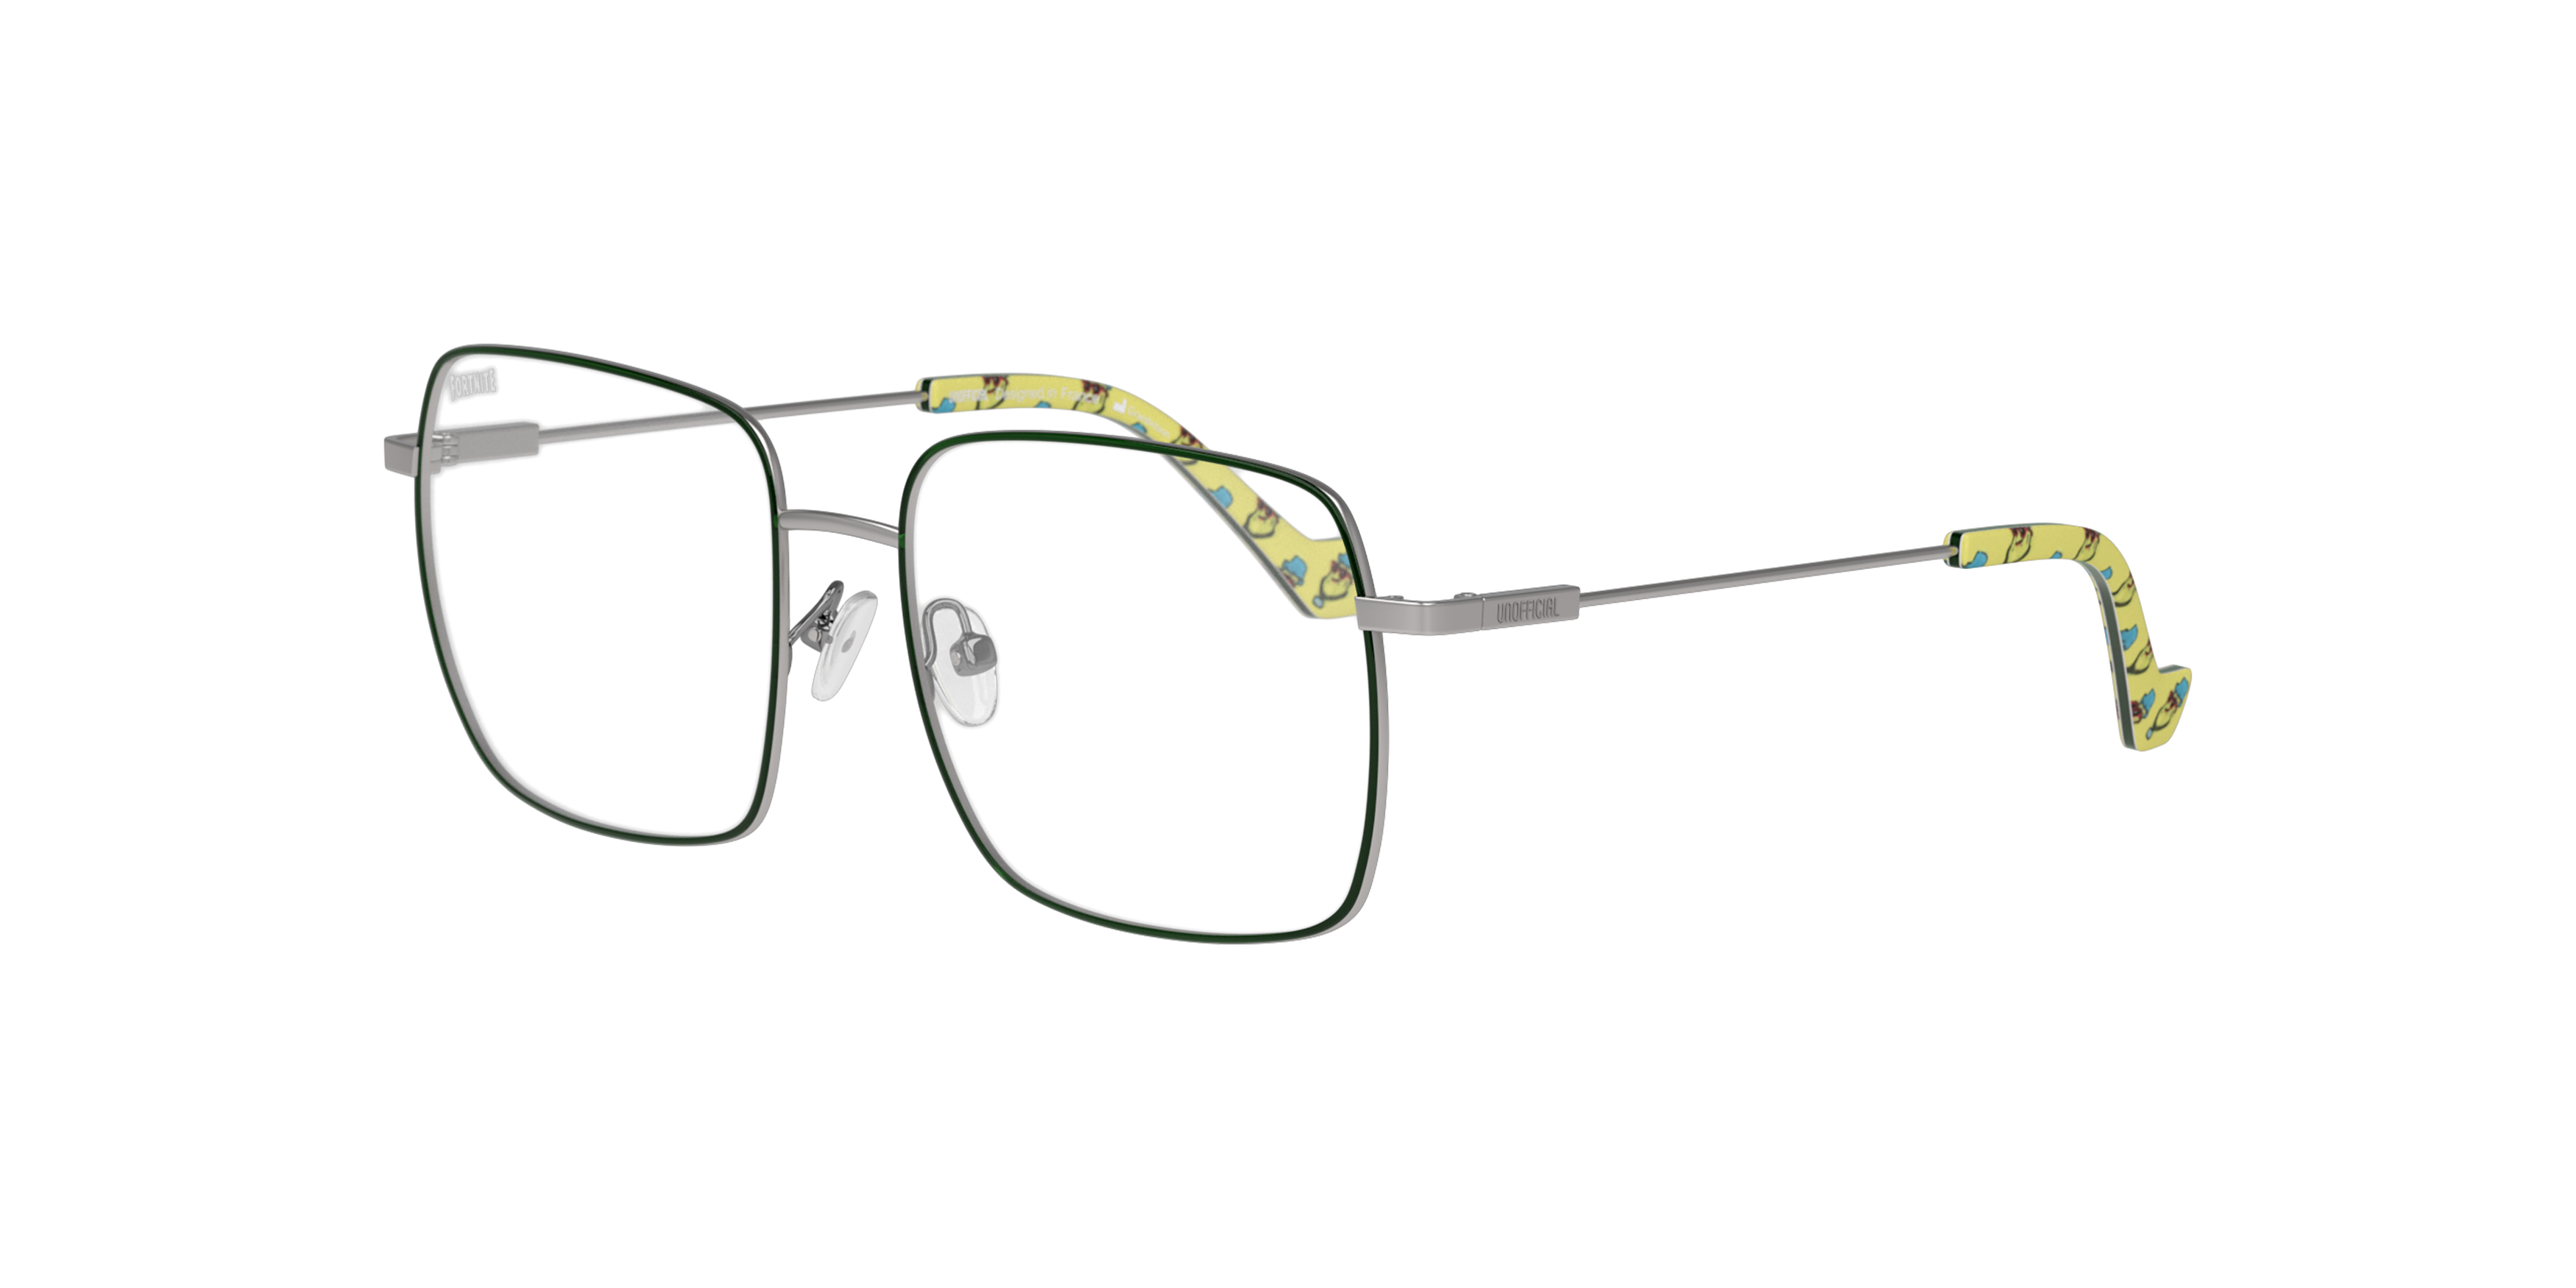 Angle_Left01 Fortnite with Unofficial UNSU0170 (BGT0) Glasses Transparent / Grey